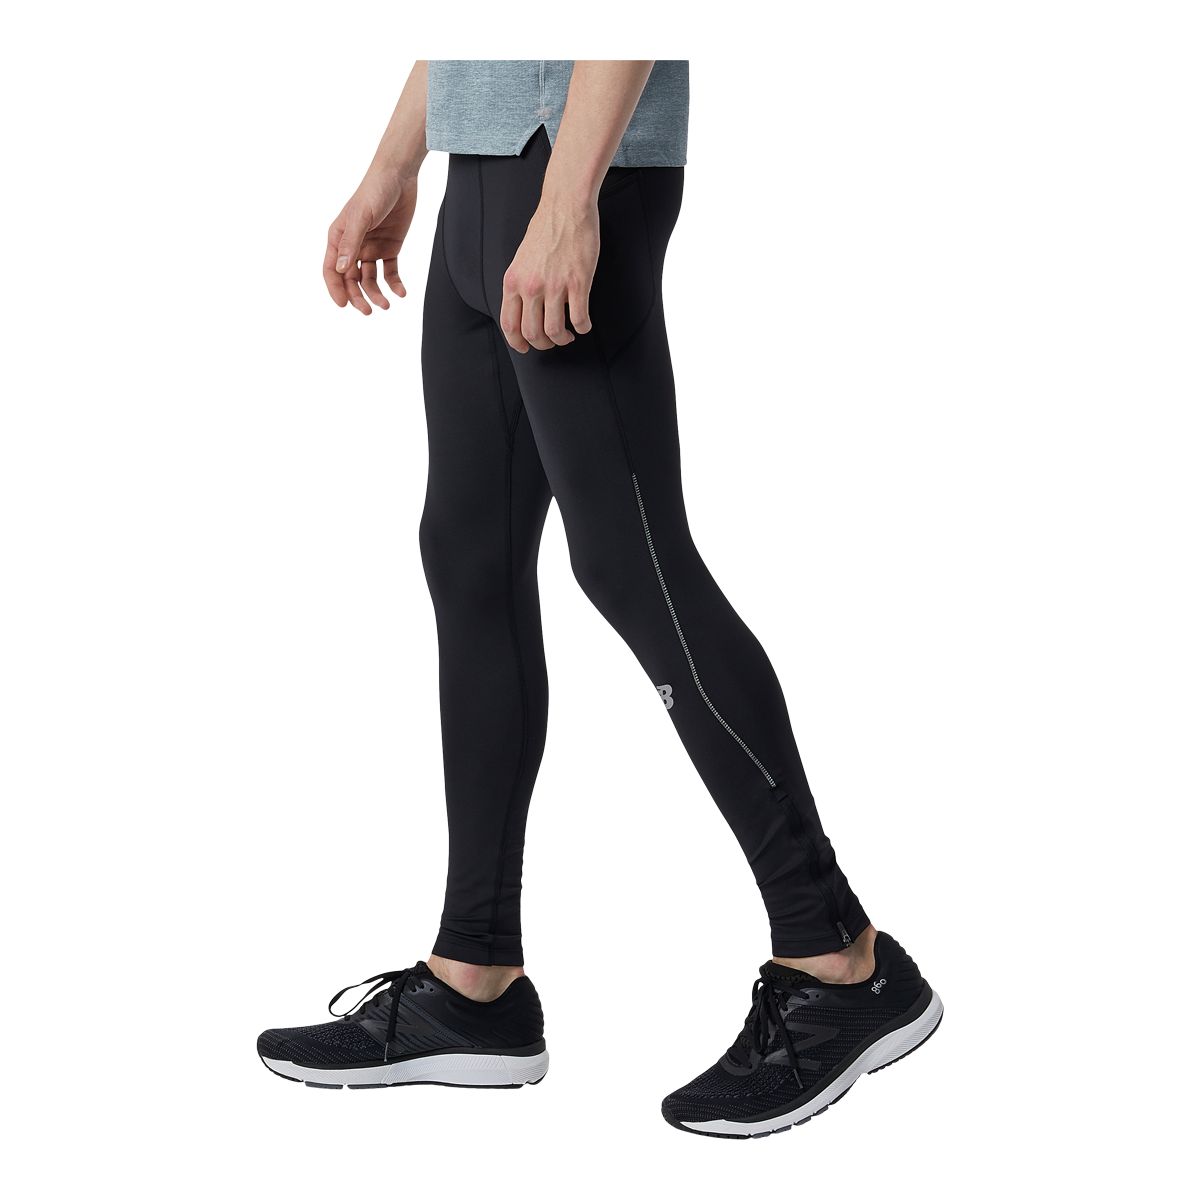 Nike Tights Long Mens / Mens Sports Legging / Yoga Leggings / Running Tights